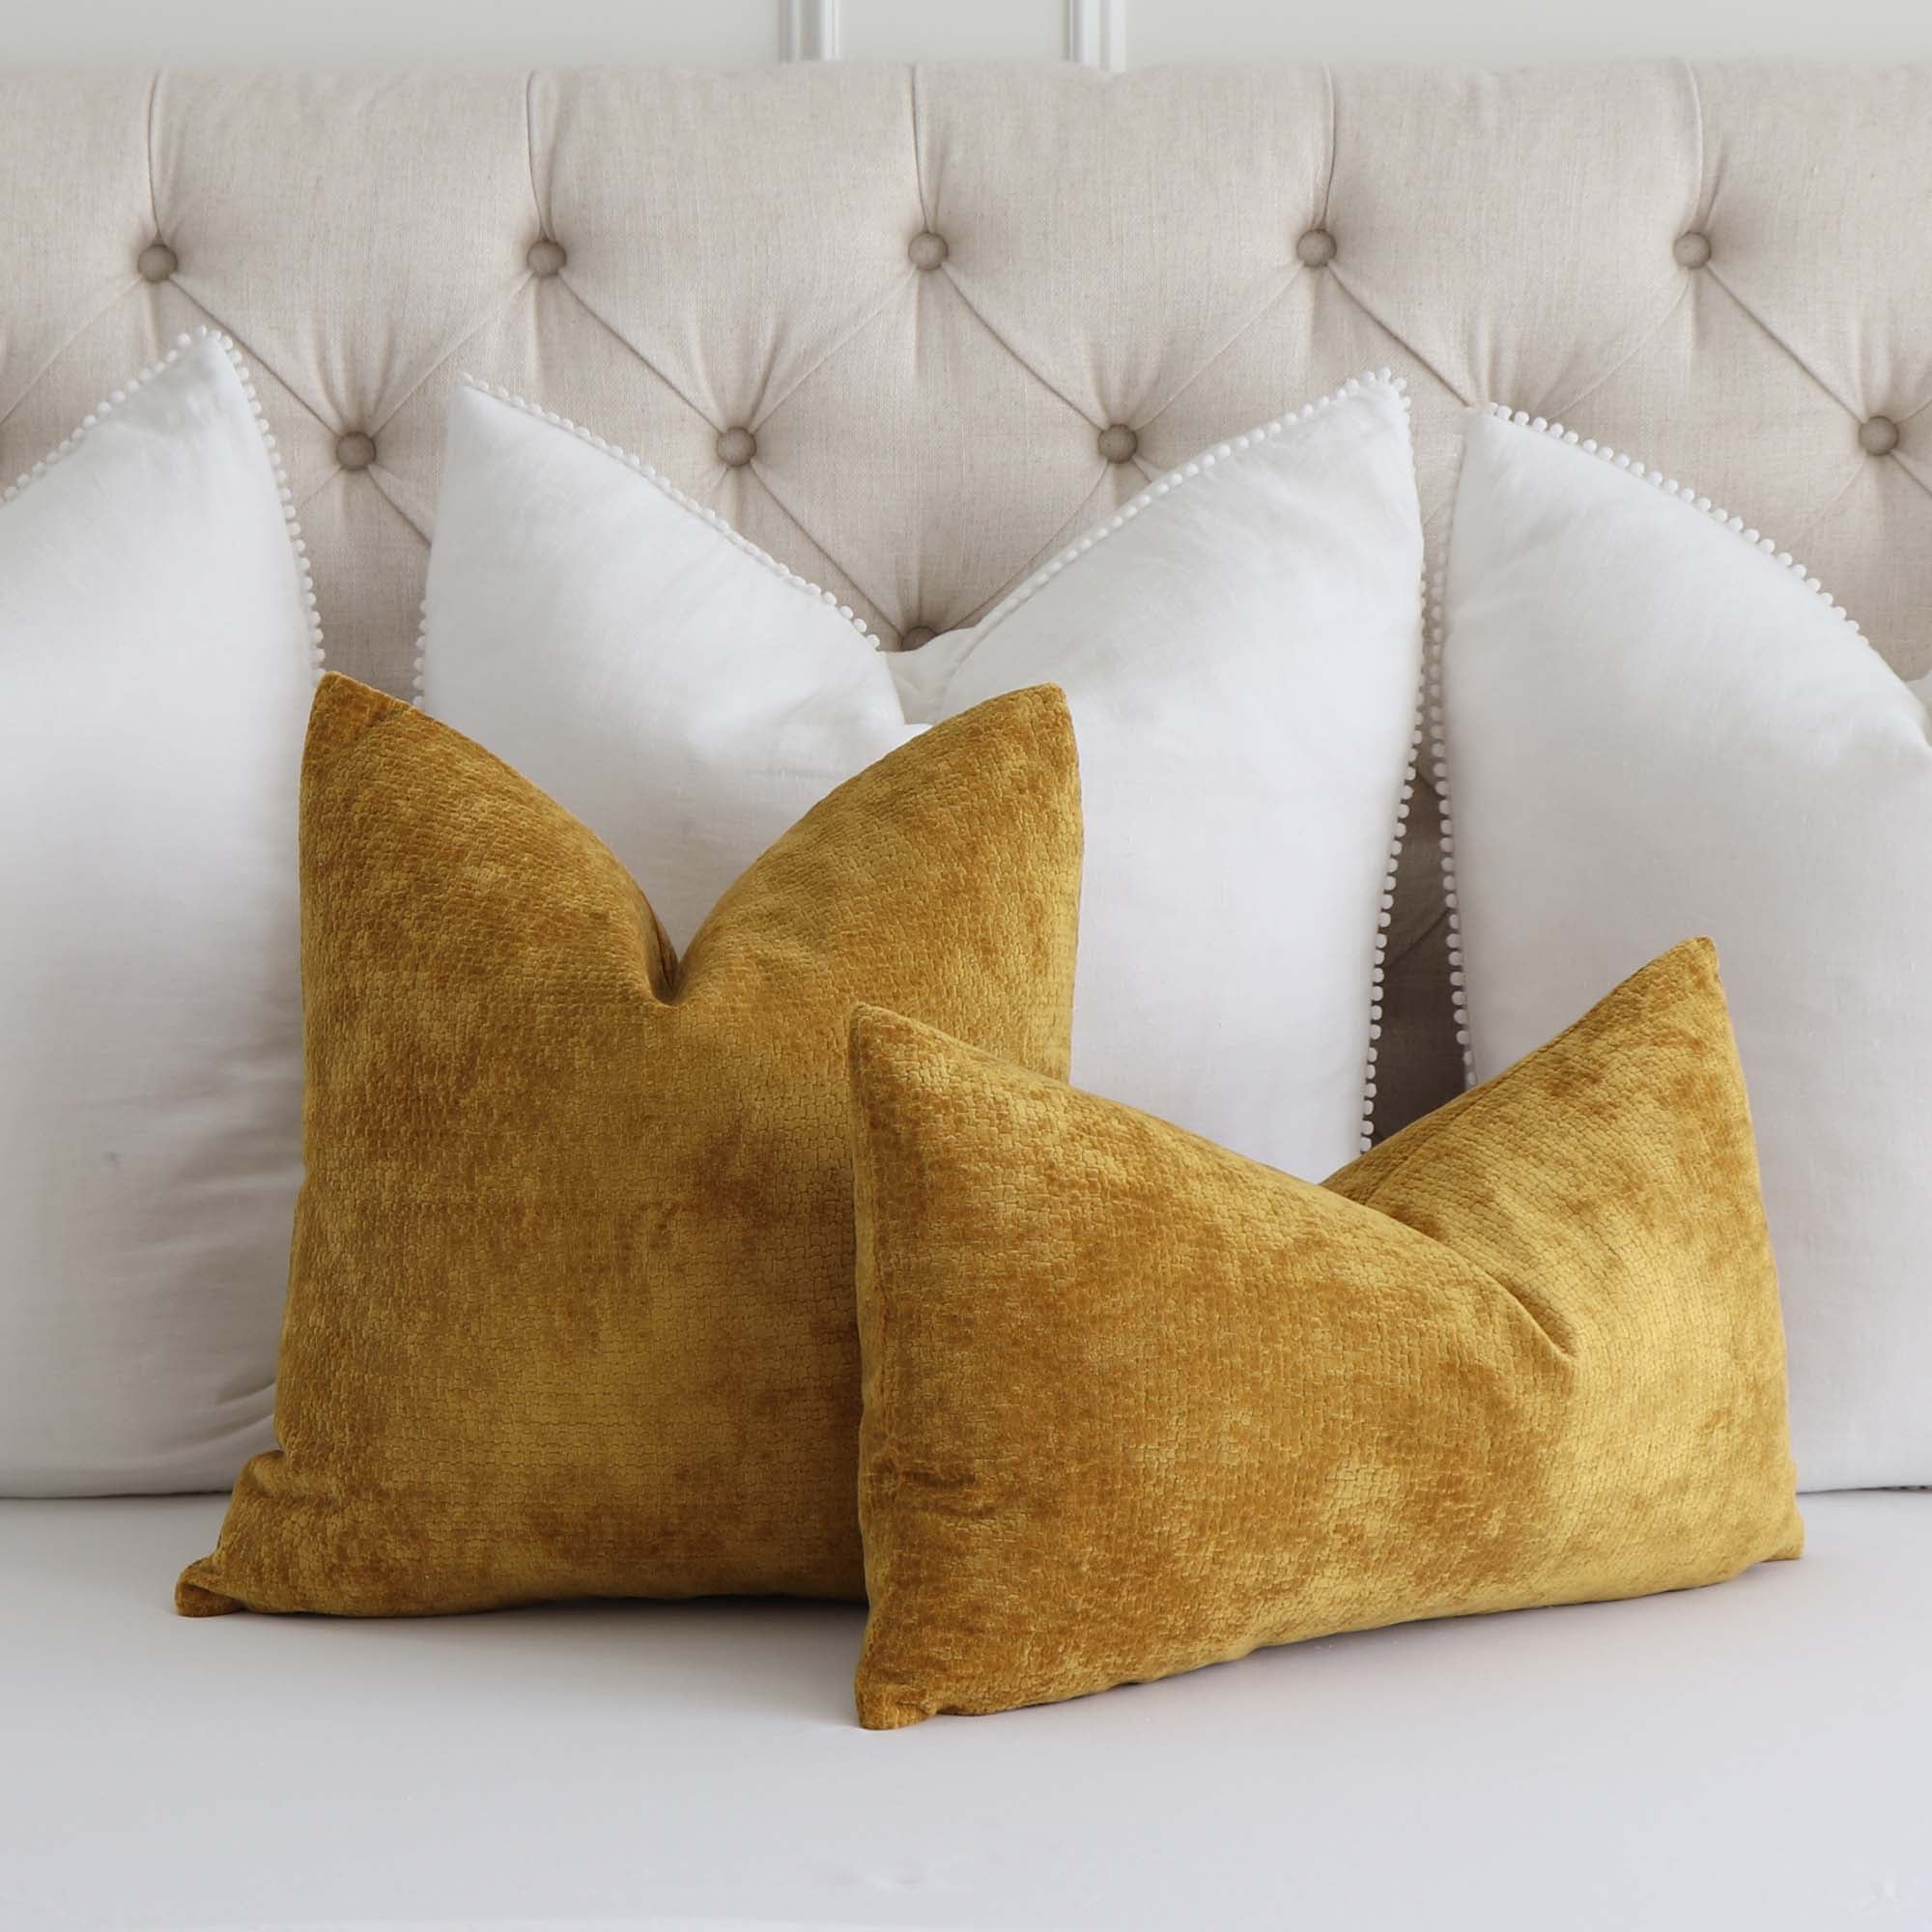 Kelly Wearstler Lee Jofa Rebus Glint Gold Textured Velvet Designer Throw Pillow Cover with White Euro Throw Pillows on Queen Bed